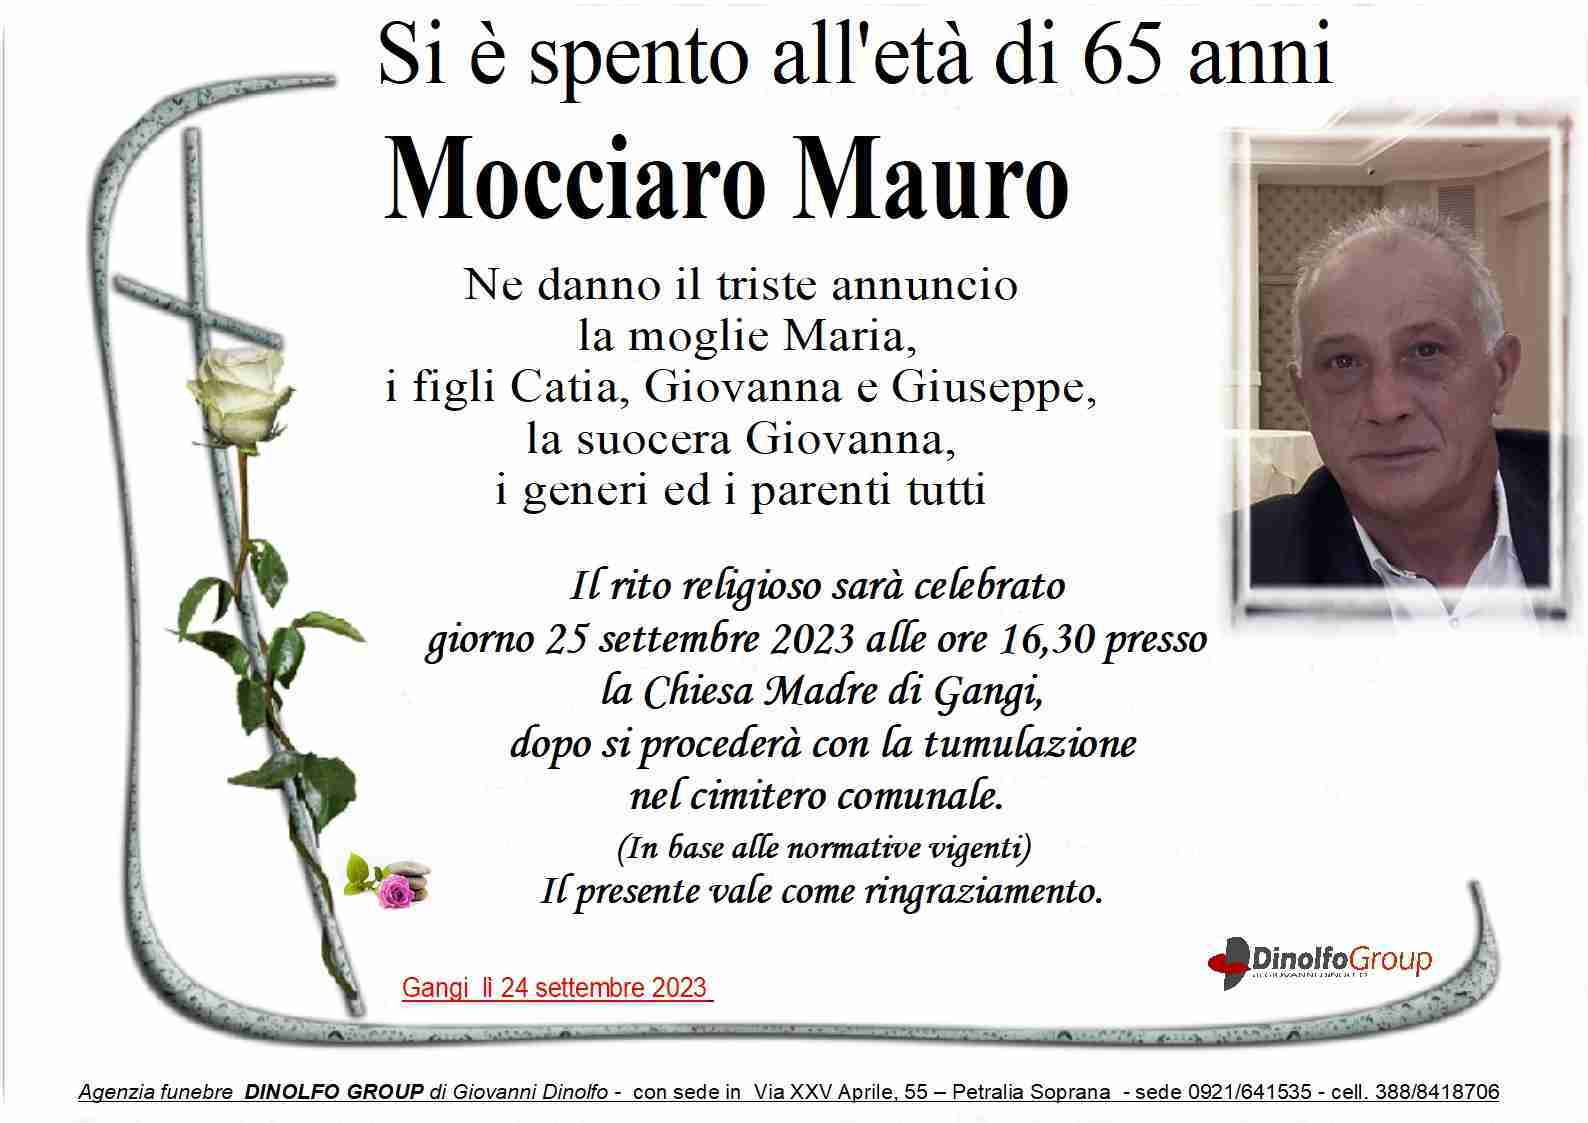 Mauro Mocciaro